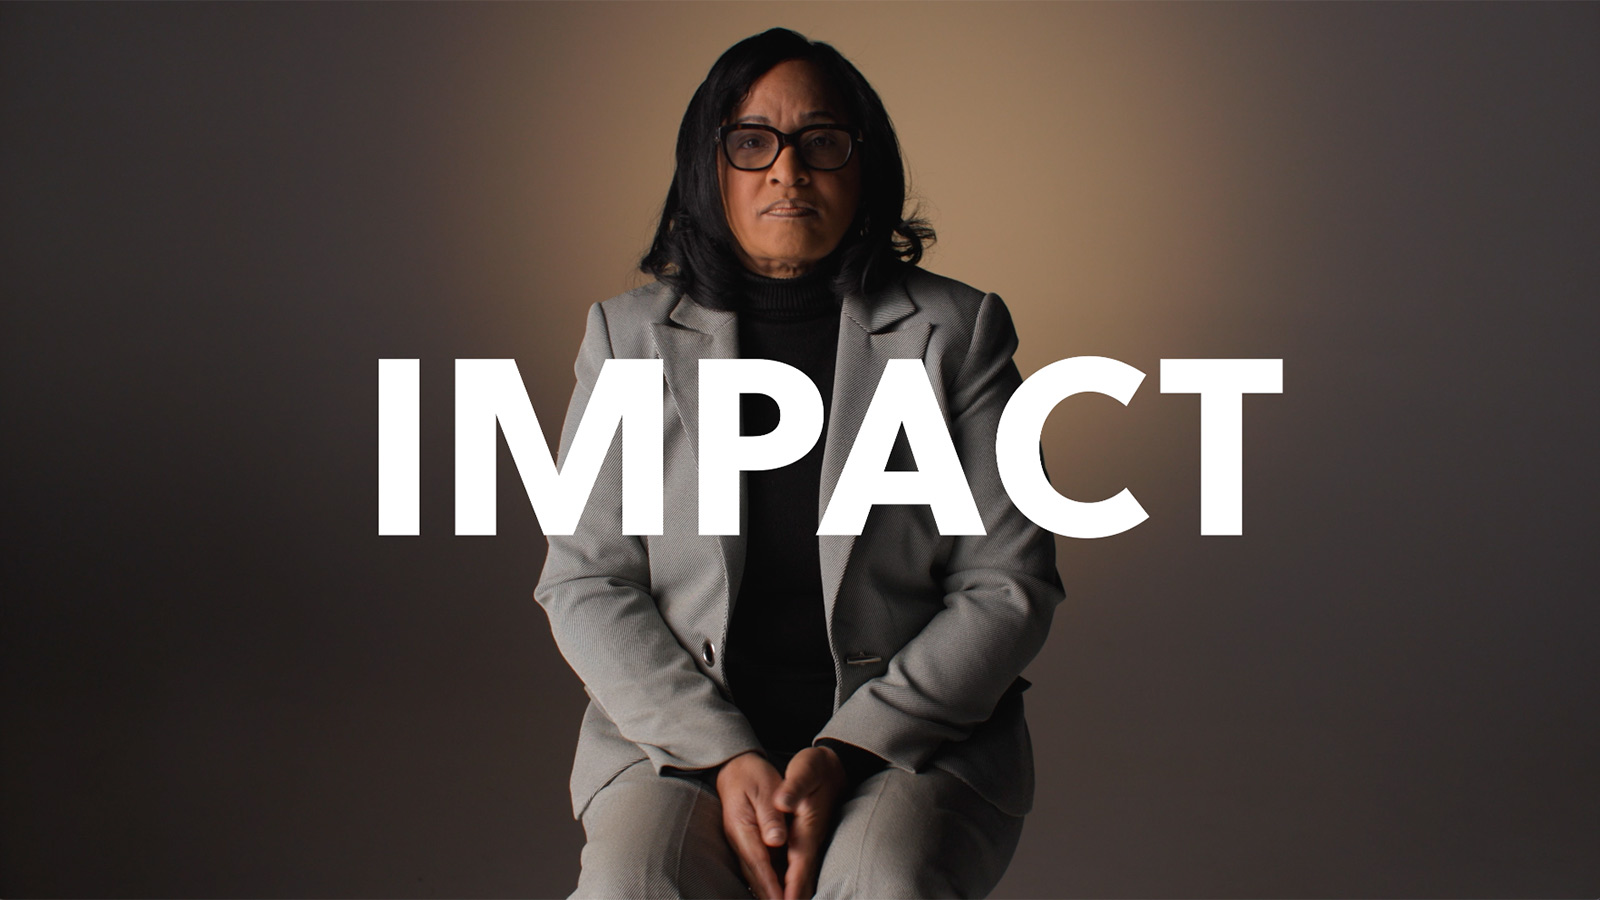 Kauffman Scholars, Inc. video: "Impact"